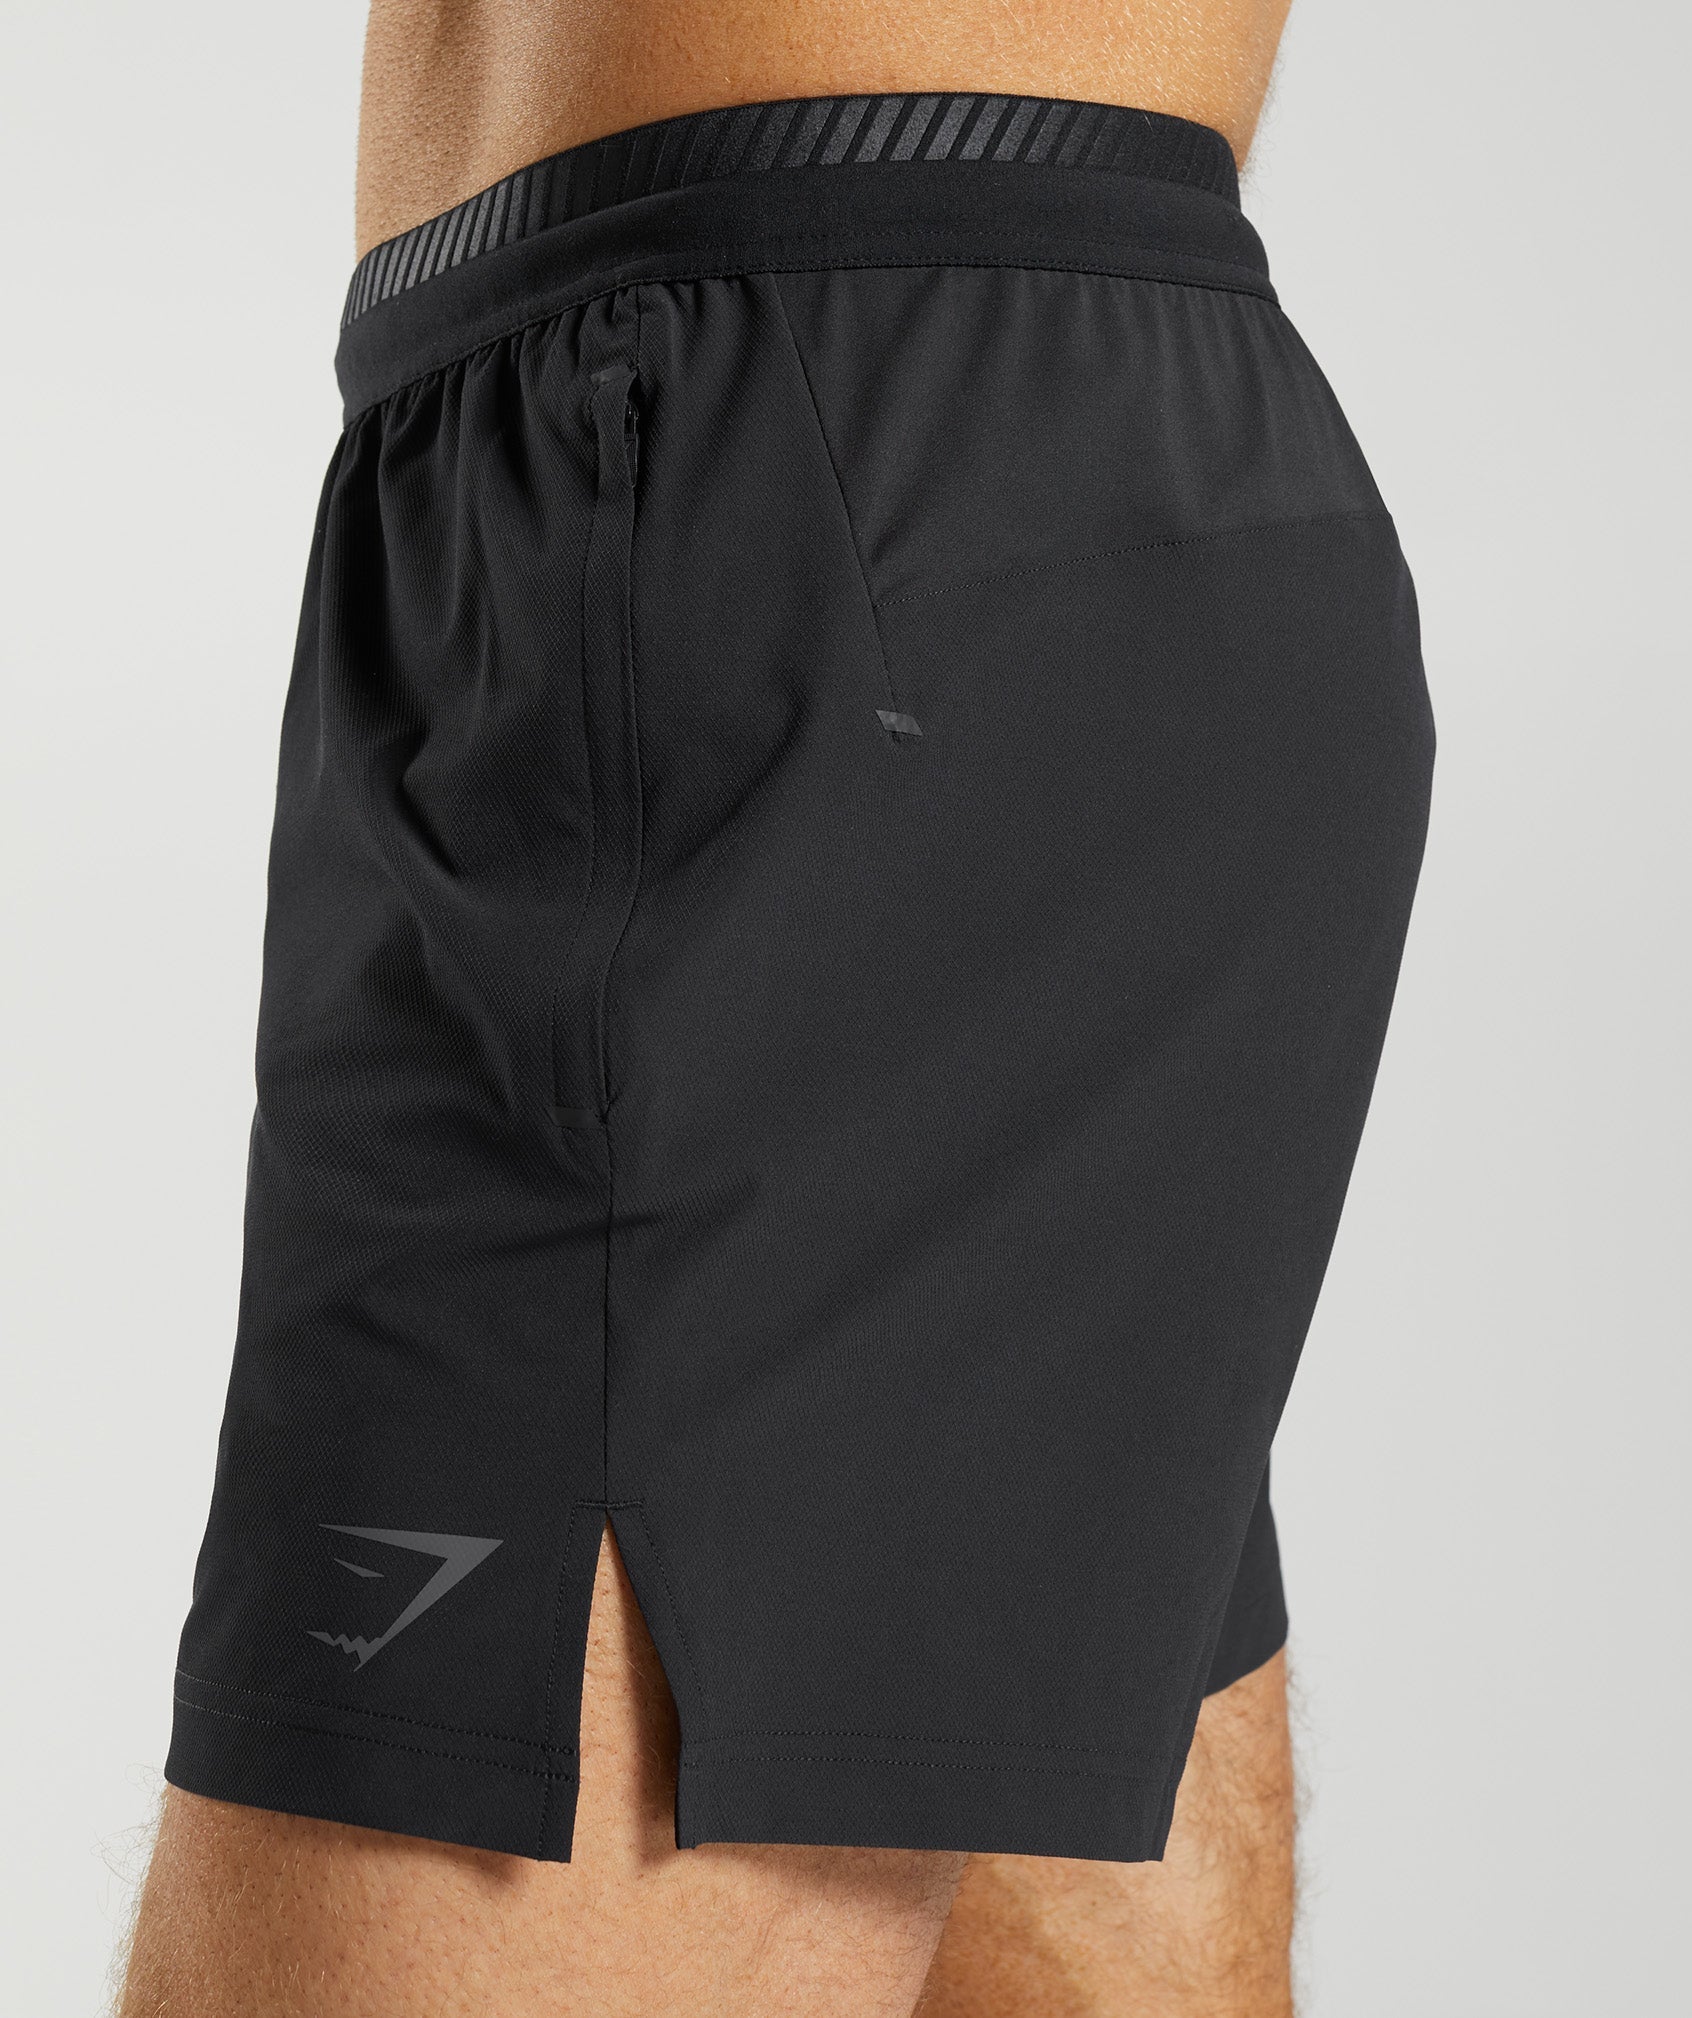 Gymshark Recess Shorts - Black